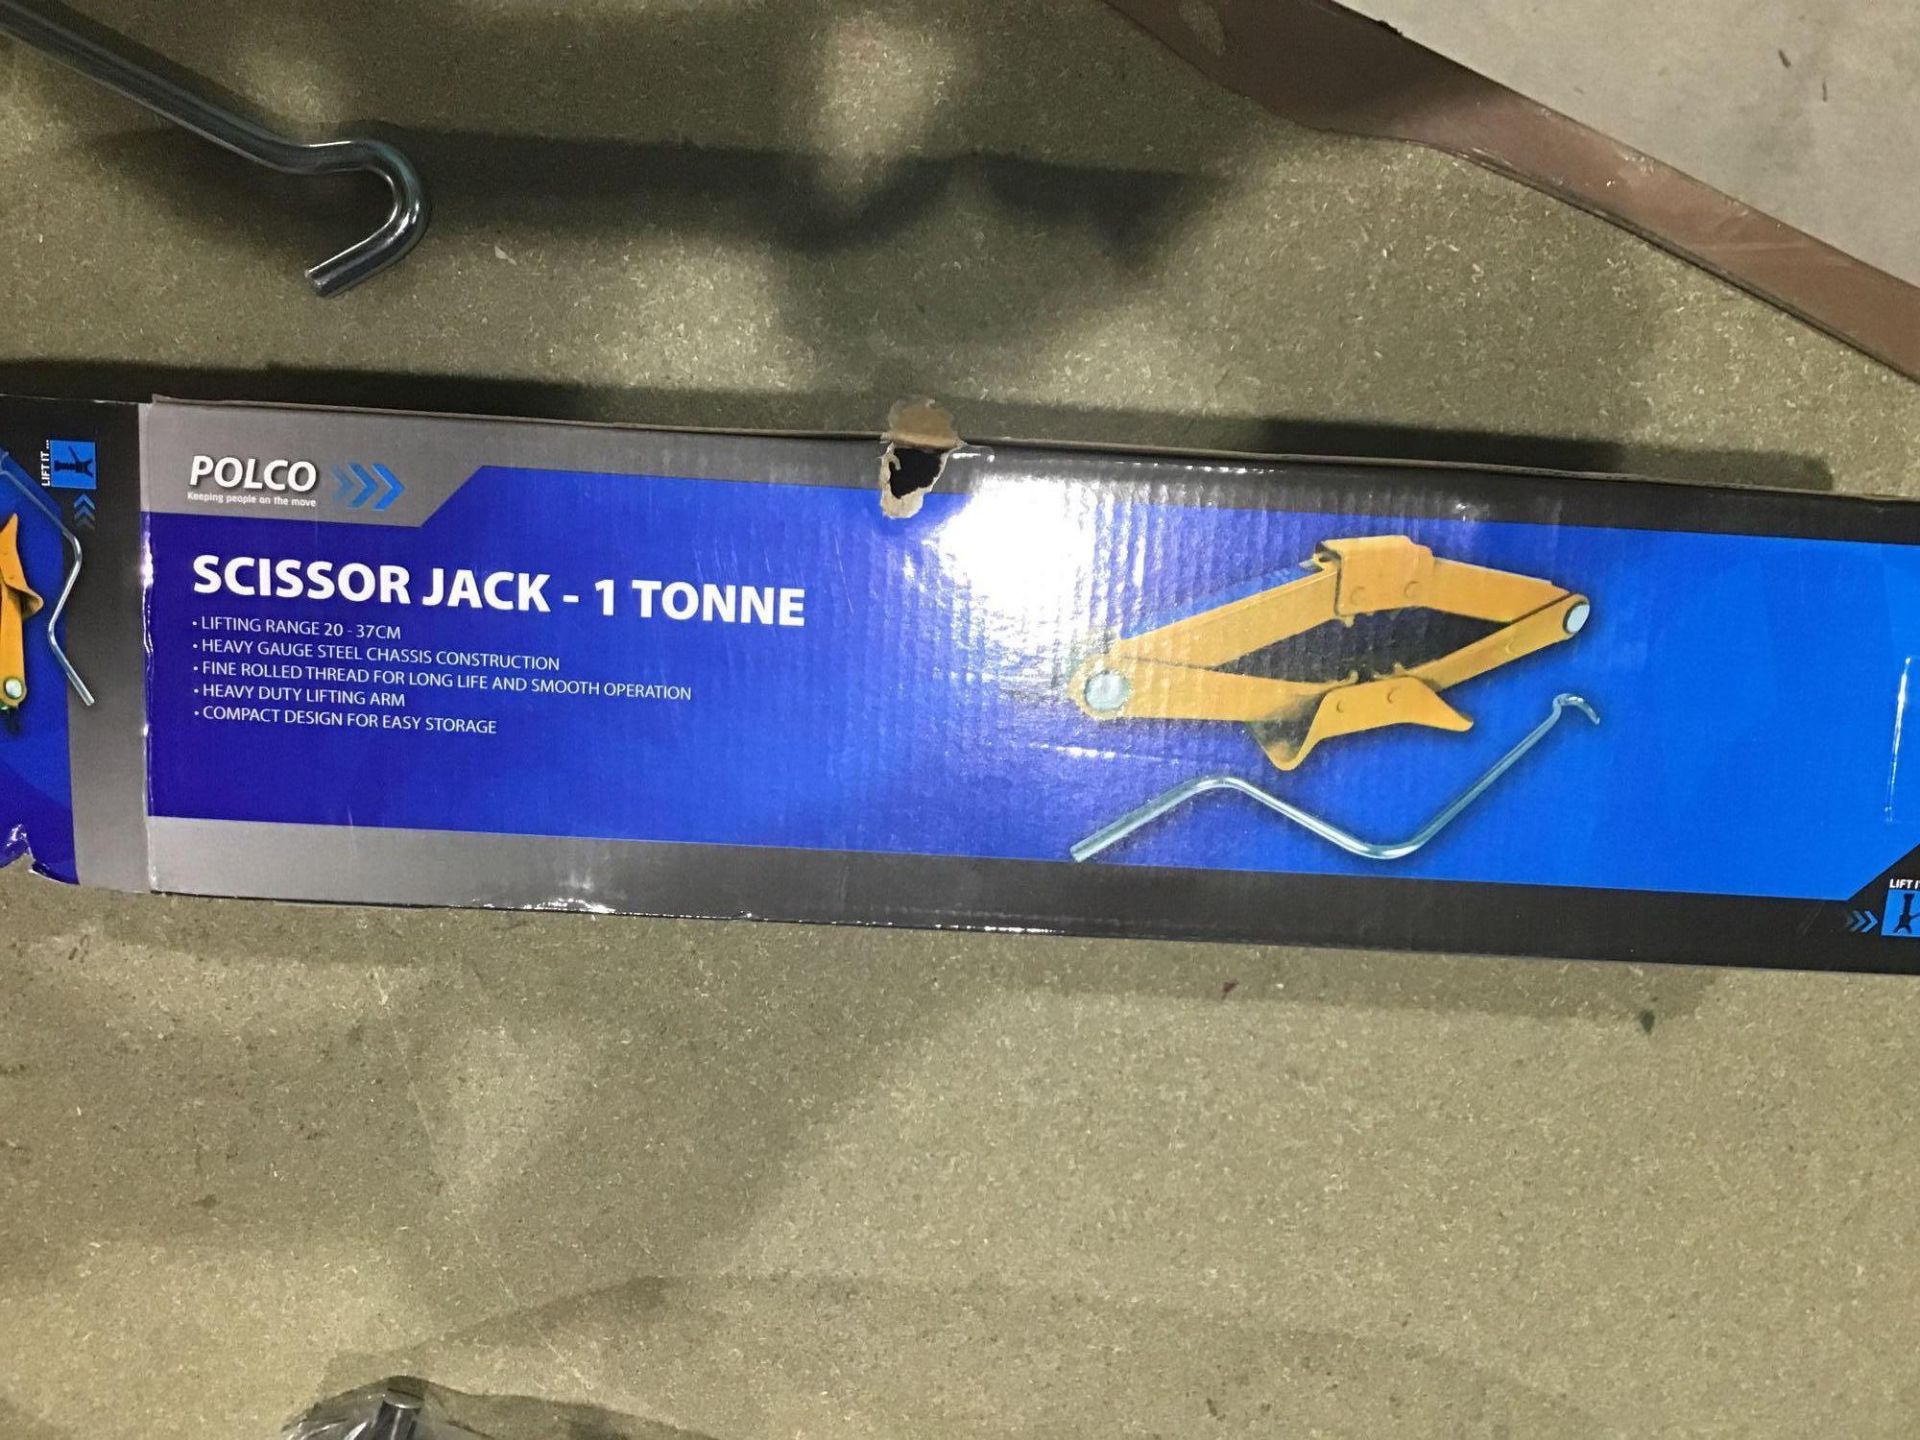 POLCO Scissor Jack - 1 Tonne - £18.00 RRP - Image 2 of 4